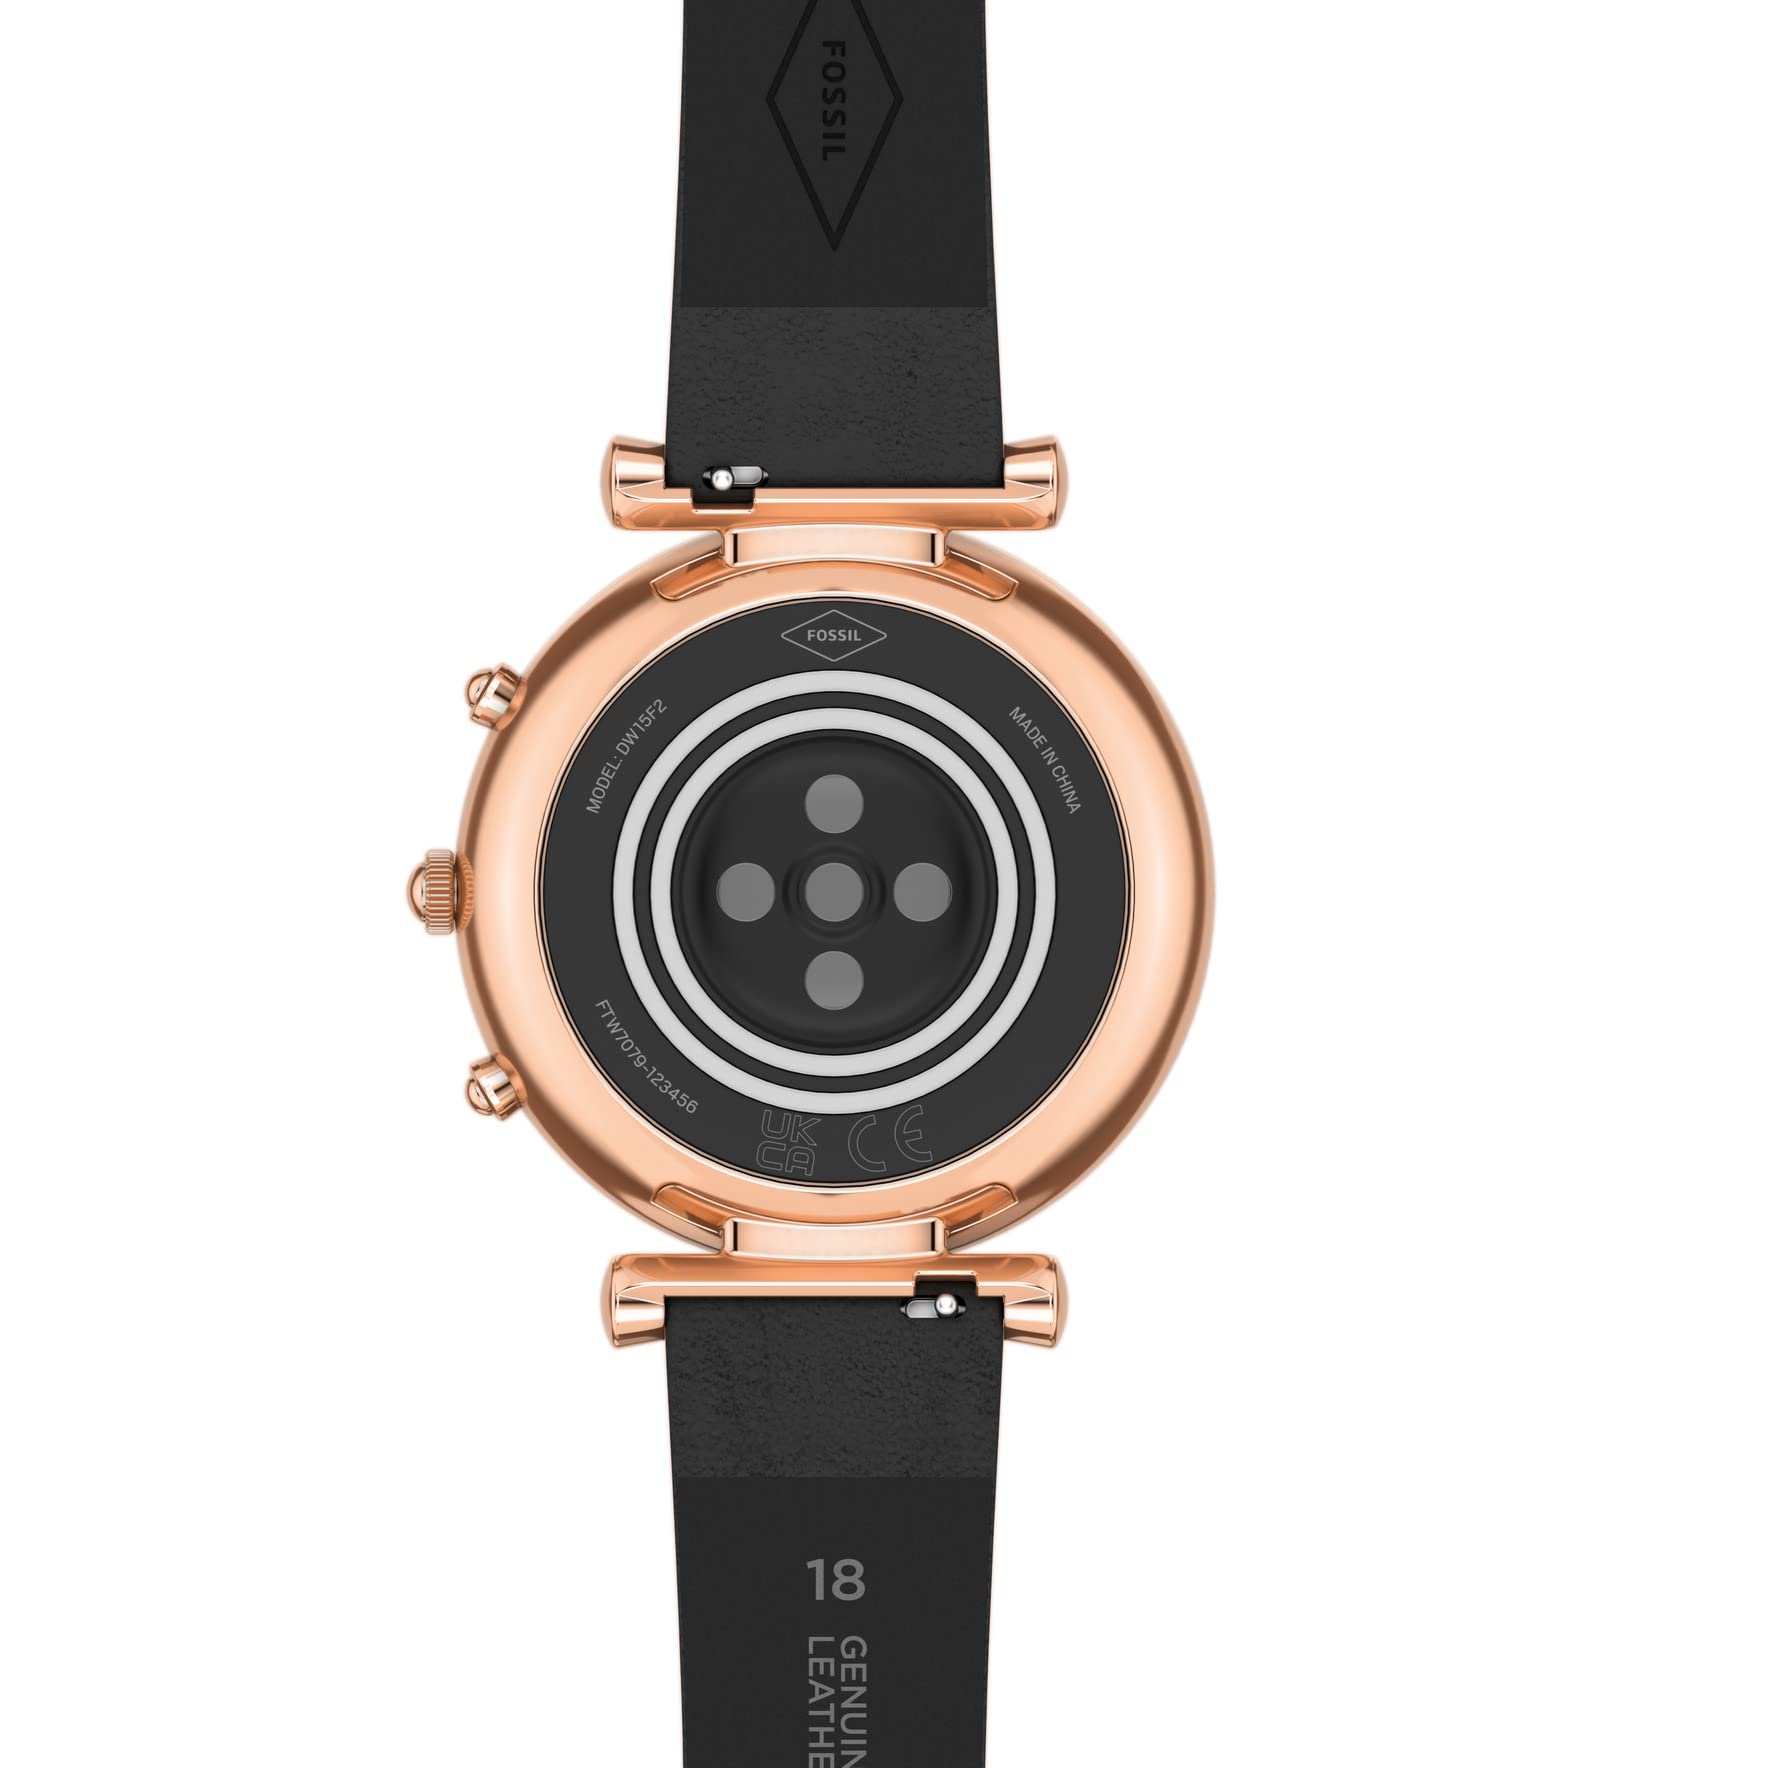 Fossil Women's Gen 6 Hybrid Smart Watch with Alexa Built-In, Fitness Tracker, Sleep Tracker, Heart Rate Monitor, Music Control, Smartphone Notifications